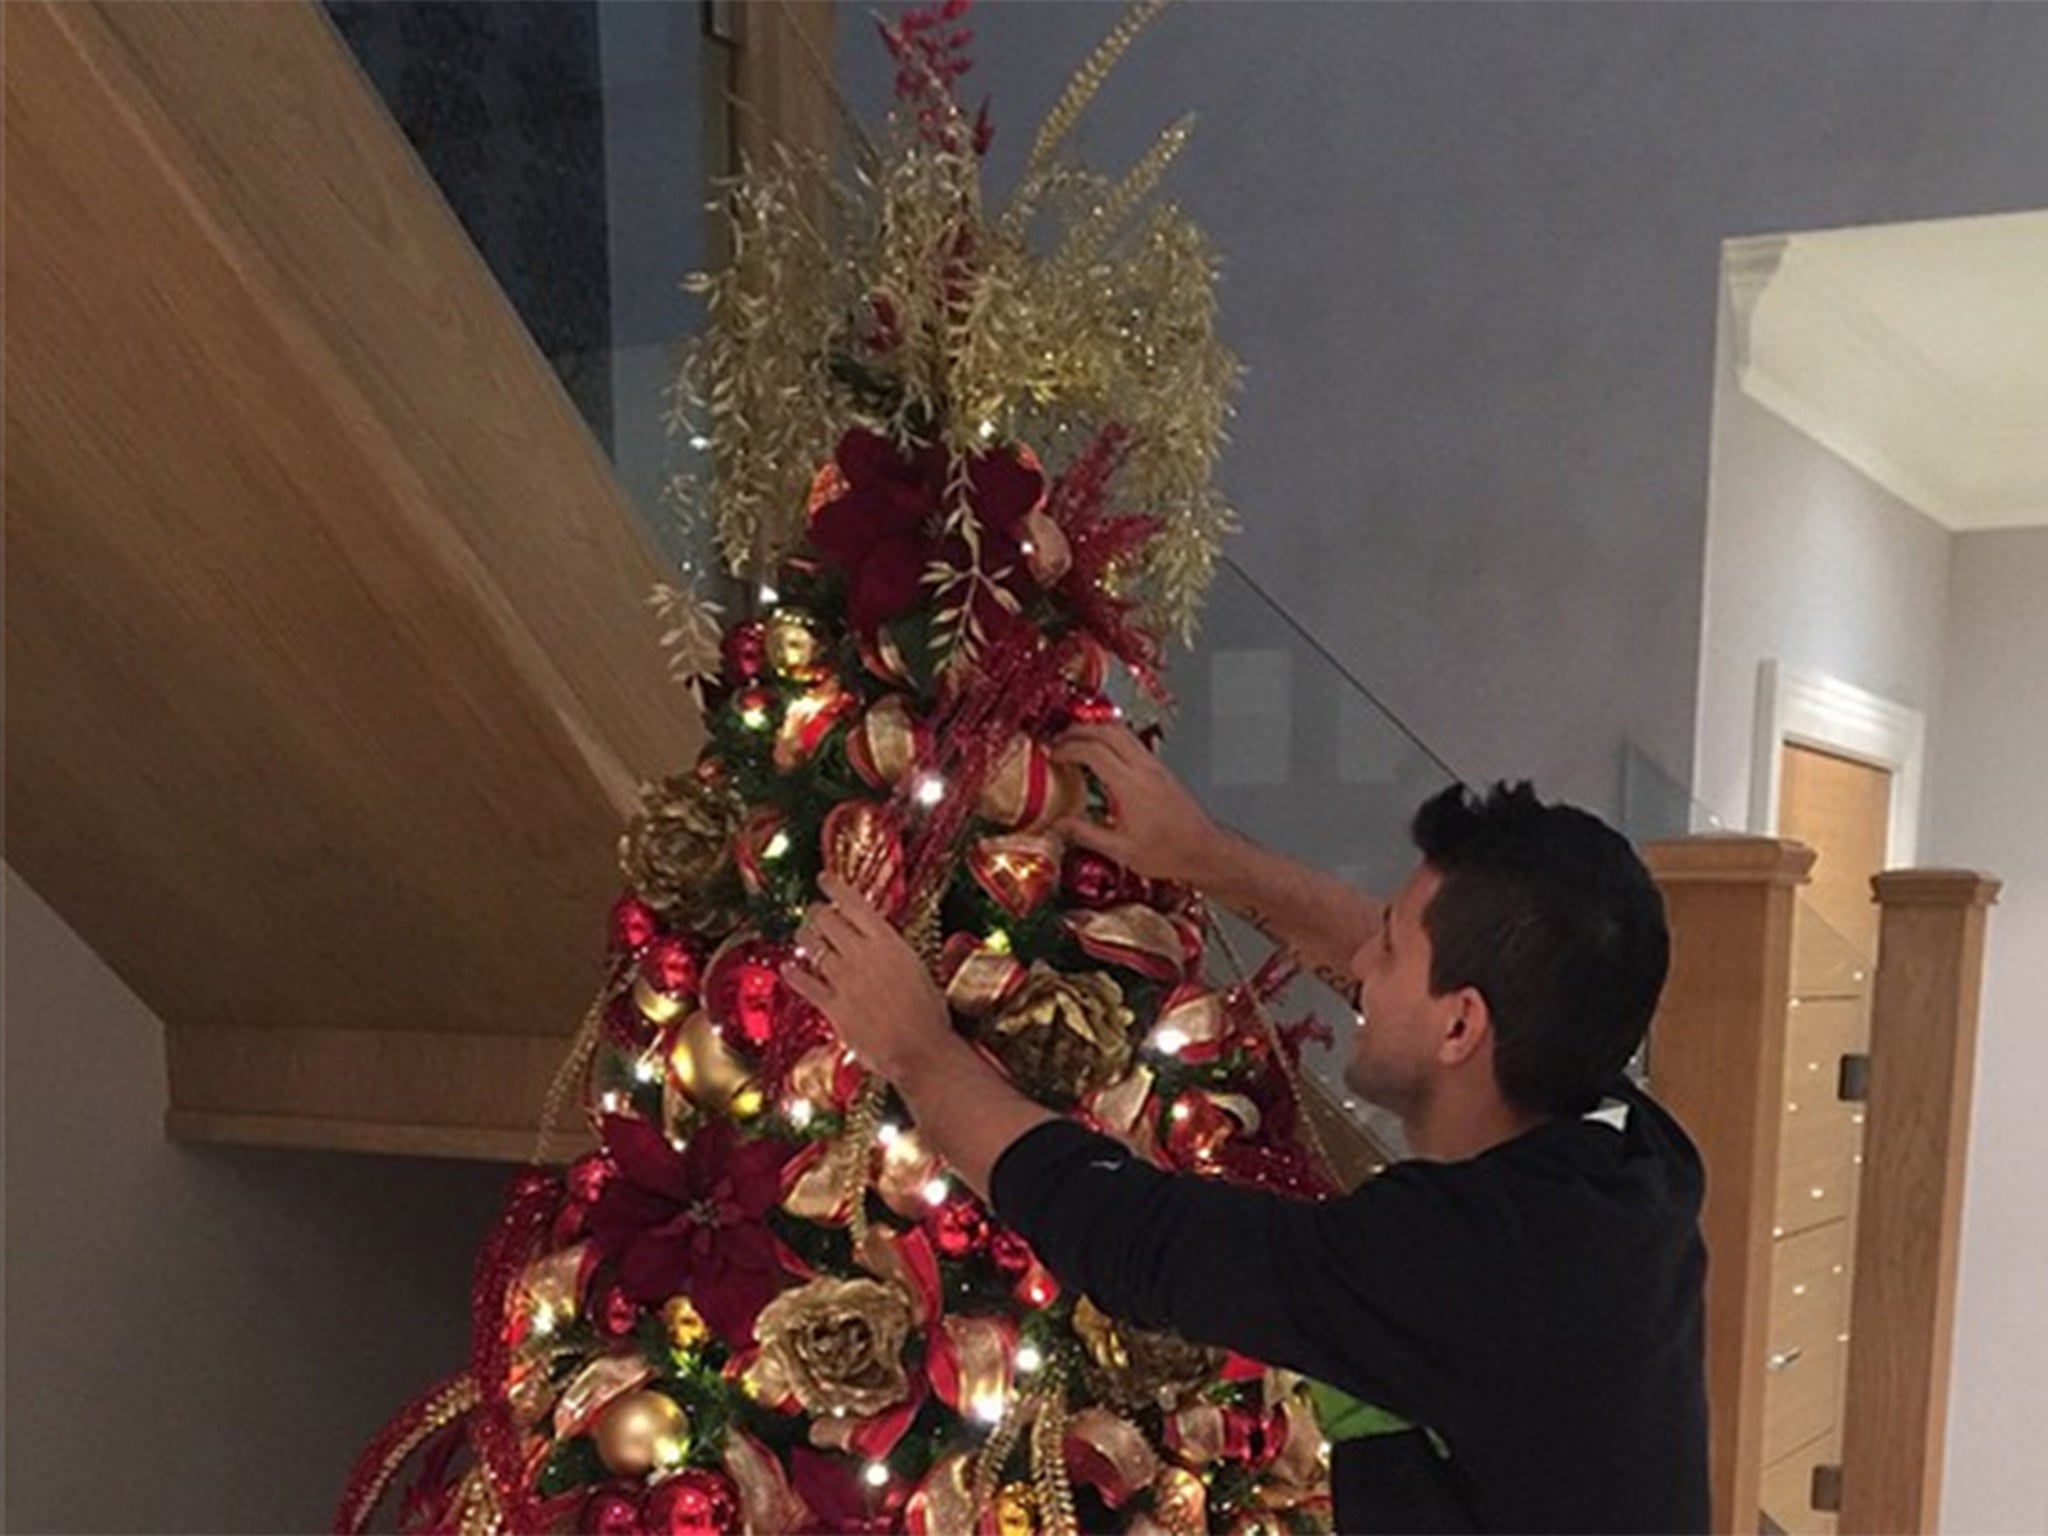 Sergio Aguero puts the finishing touches to his Christmas tree